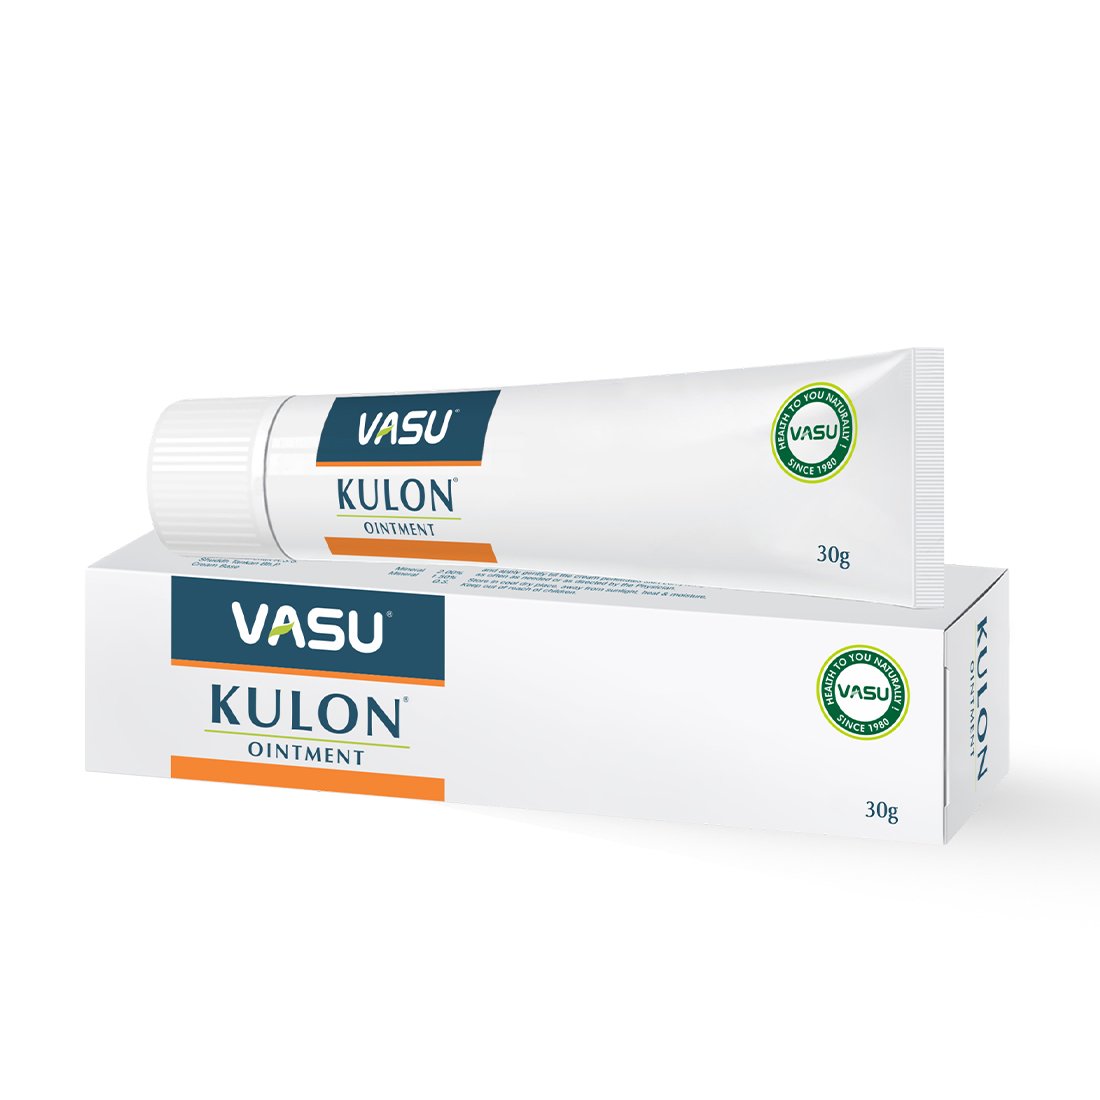 Buy Vasu Kulon Ointment at Best Price Online